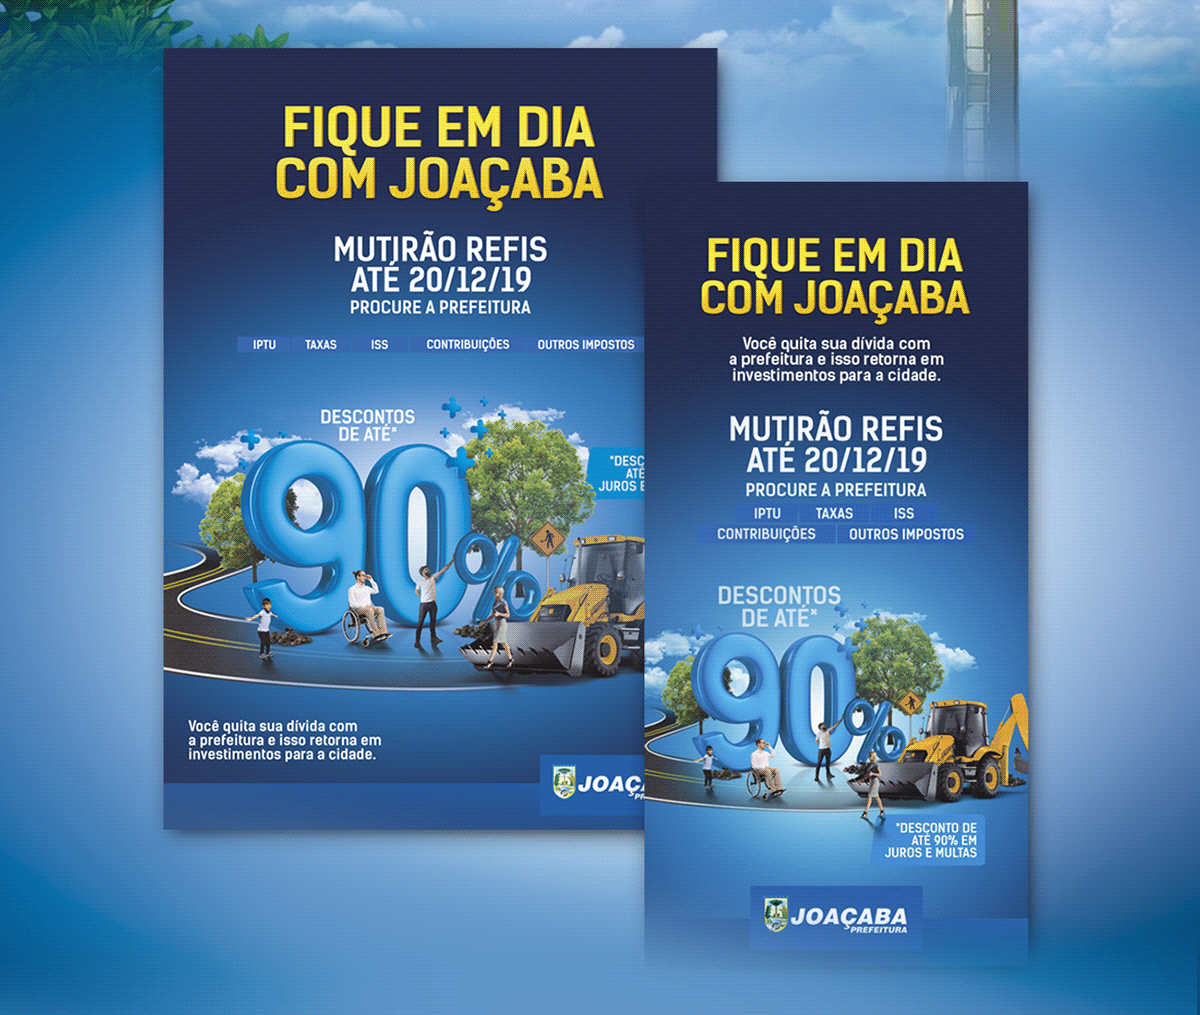 #Joaçaba #refis